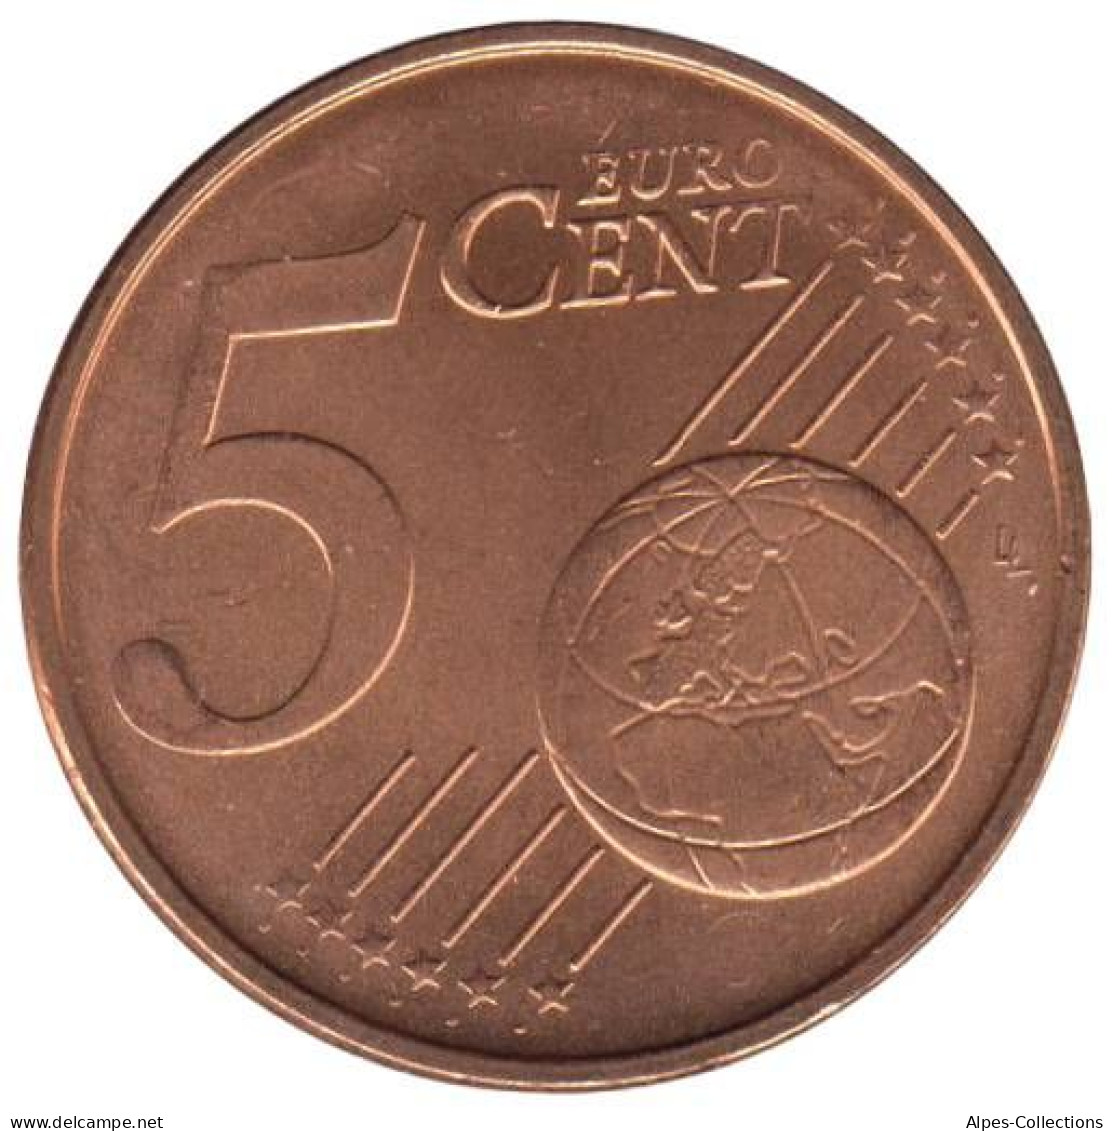 PO00506.1 - PORTUGAL - 5 Cents - 2006 - Portugal